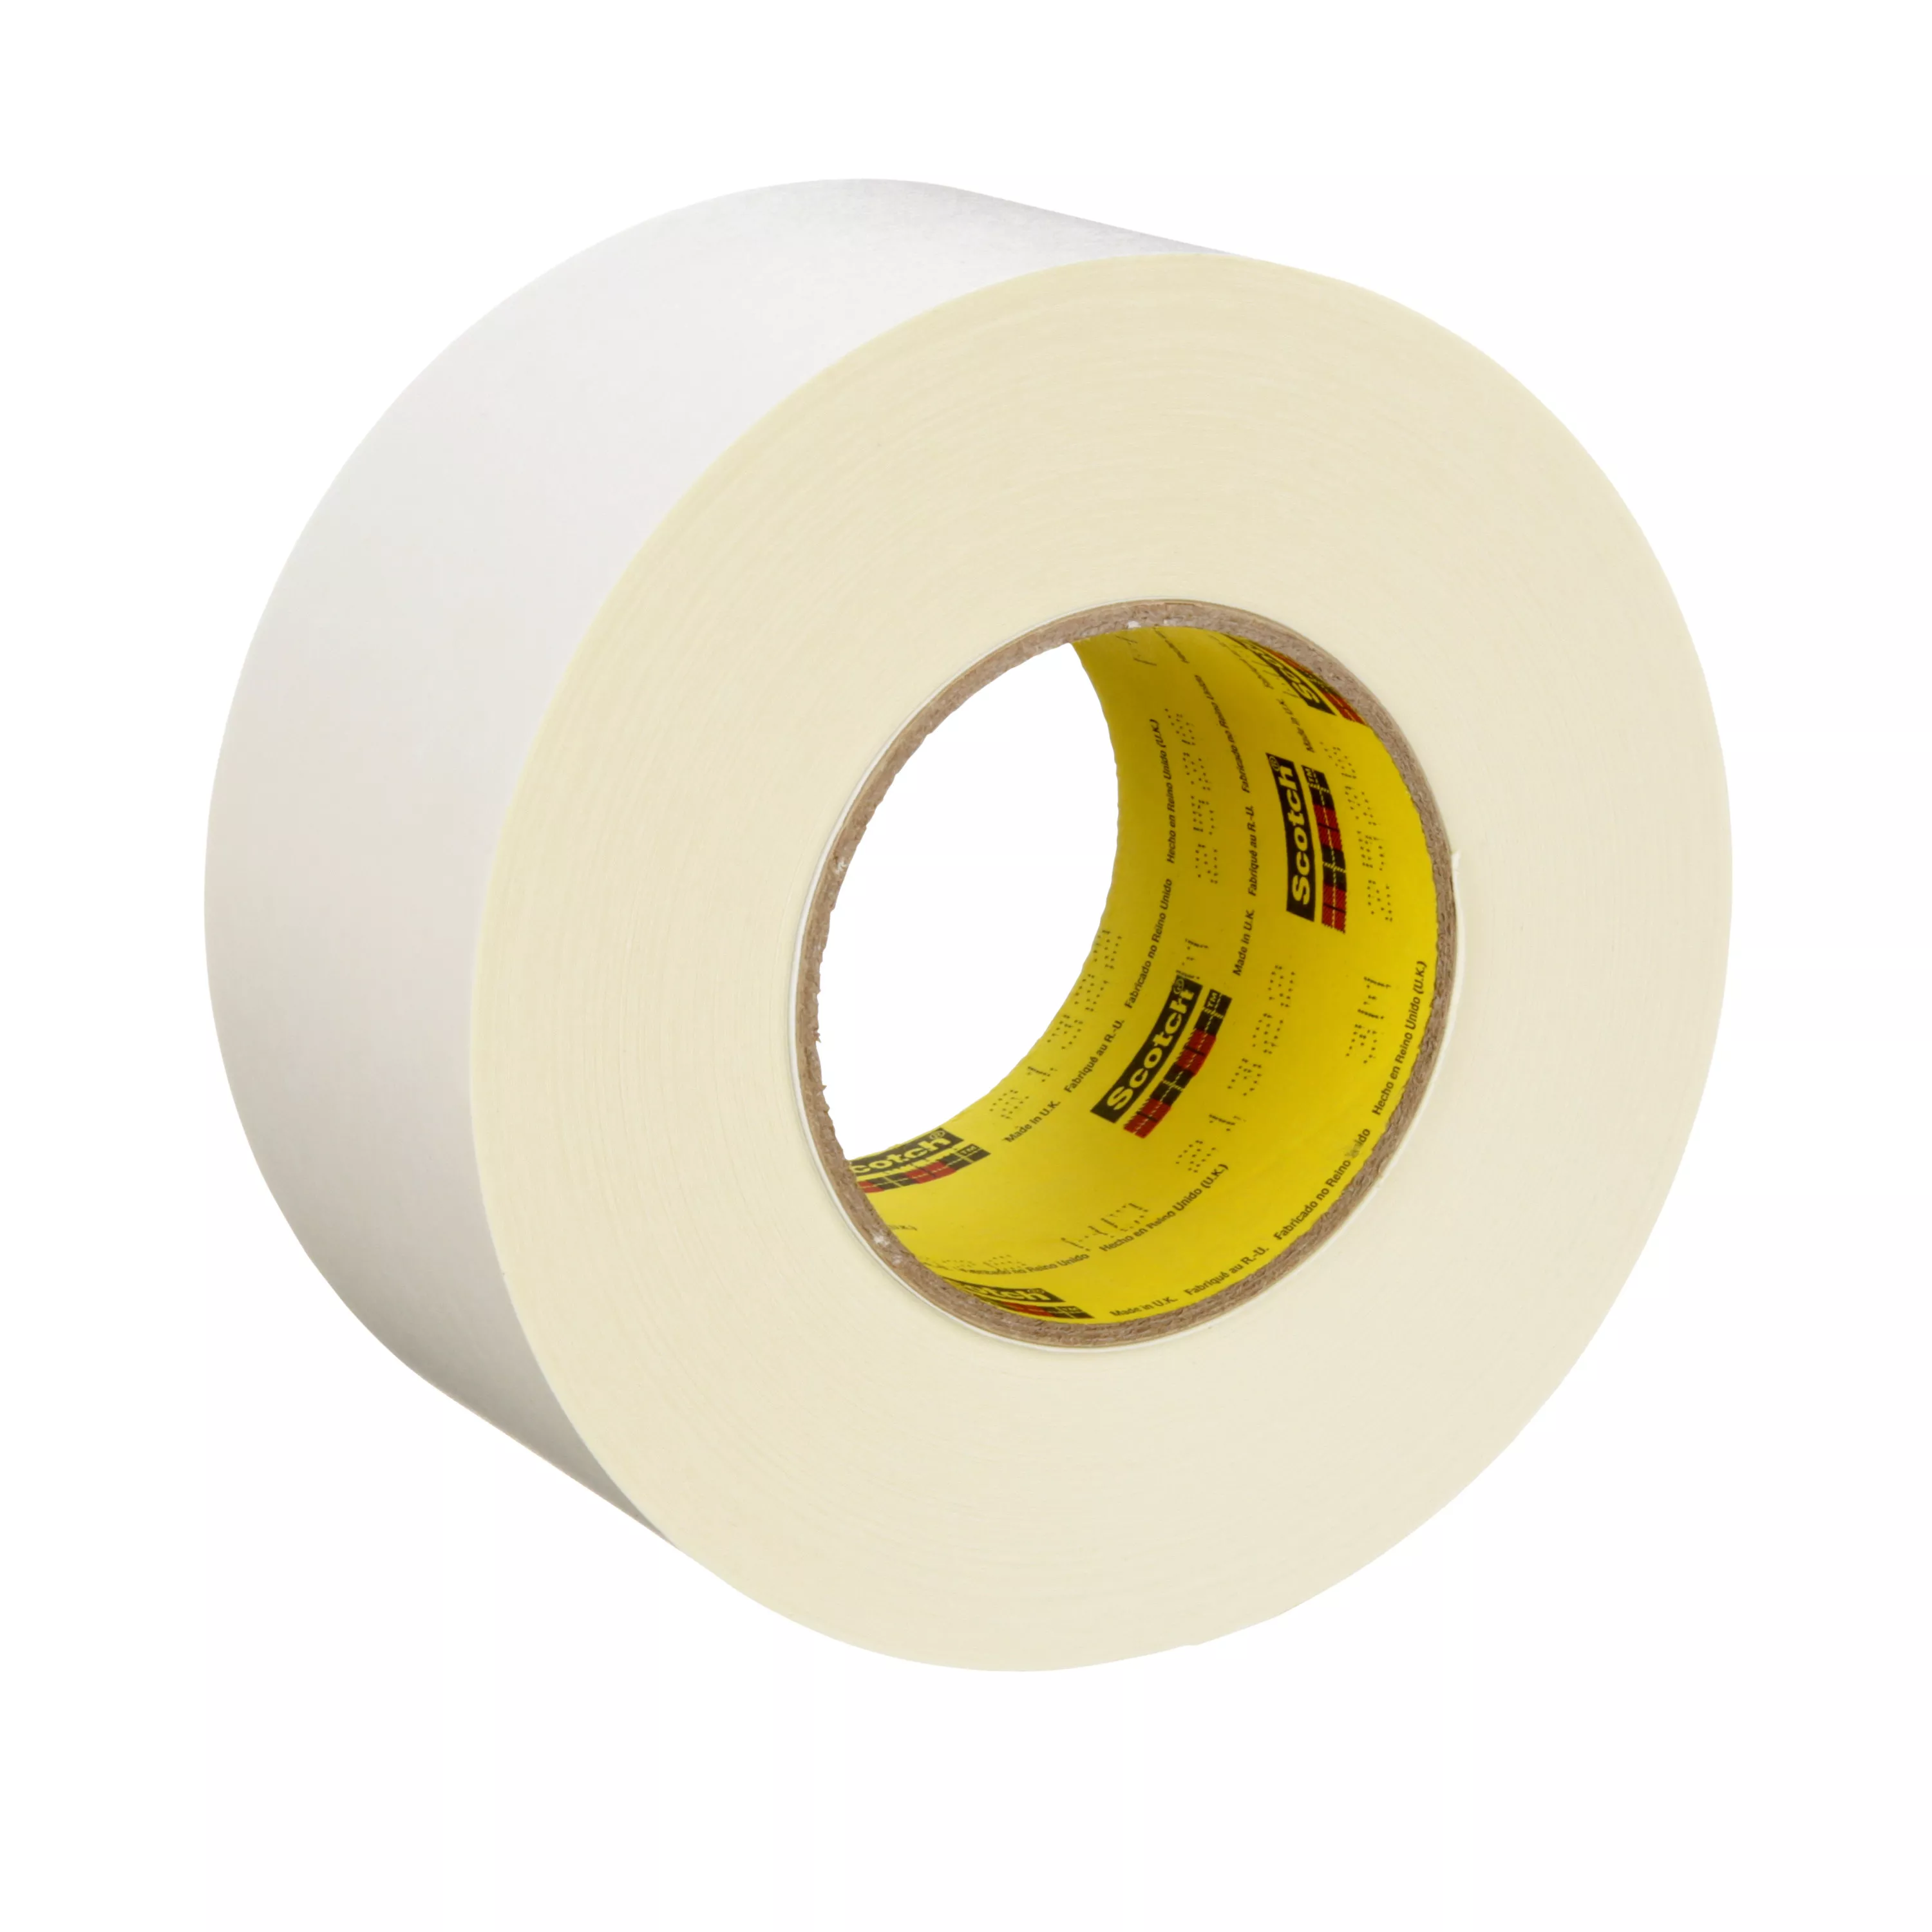 3M™ Textile Flatback Tape 2526, White, 72 mm x 55 m, 9.8 mil, 12
Rolls/Case